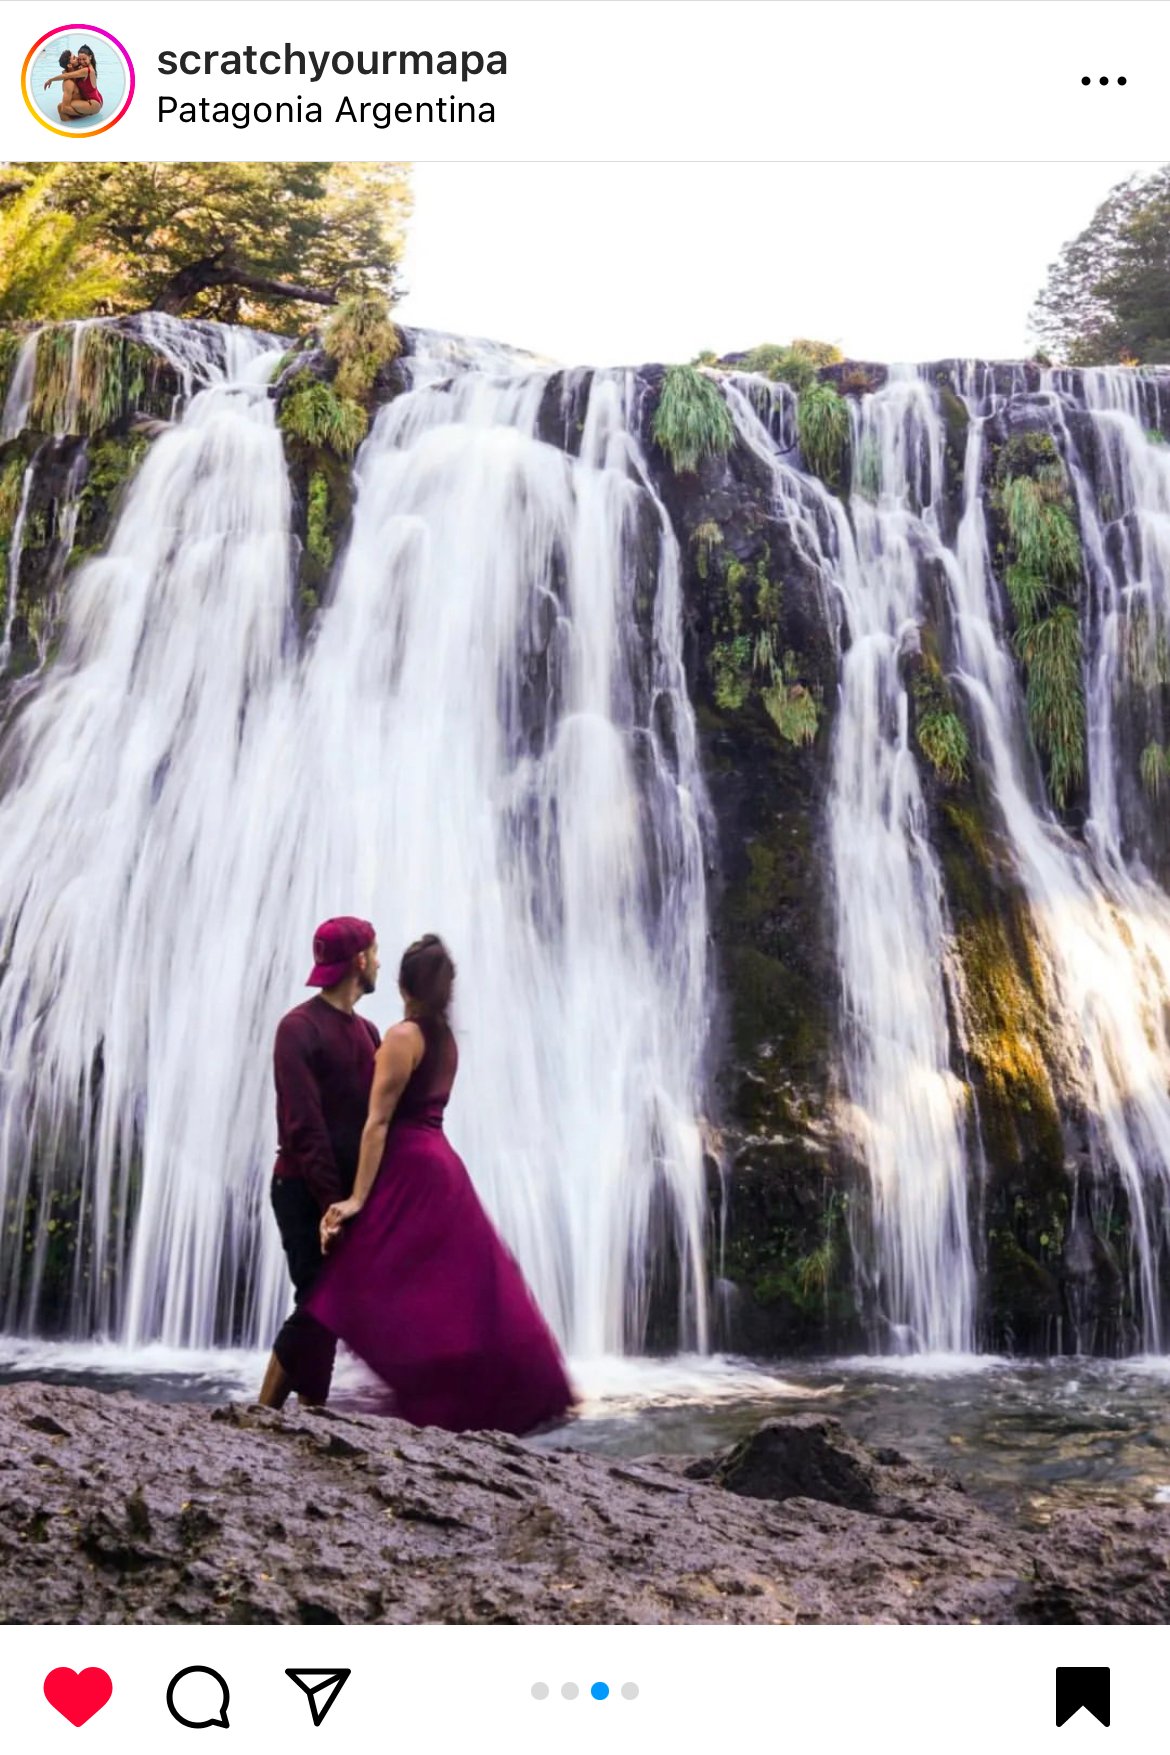 Ñivinco waterfalls in Patagonia